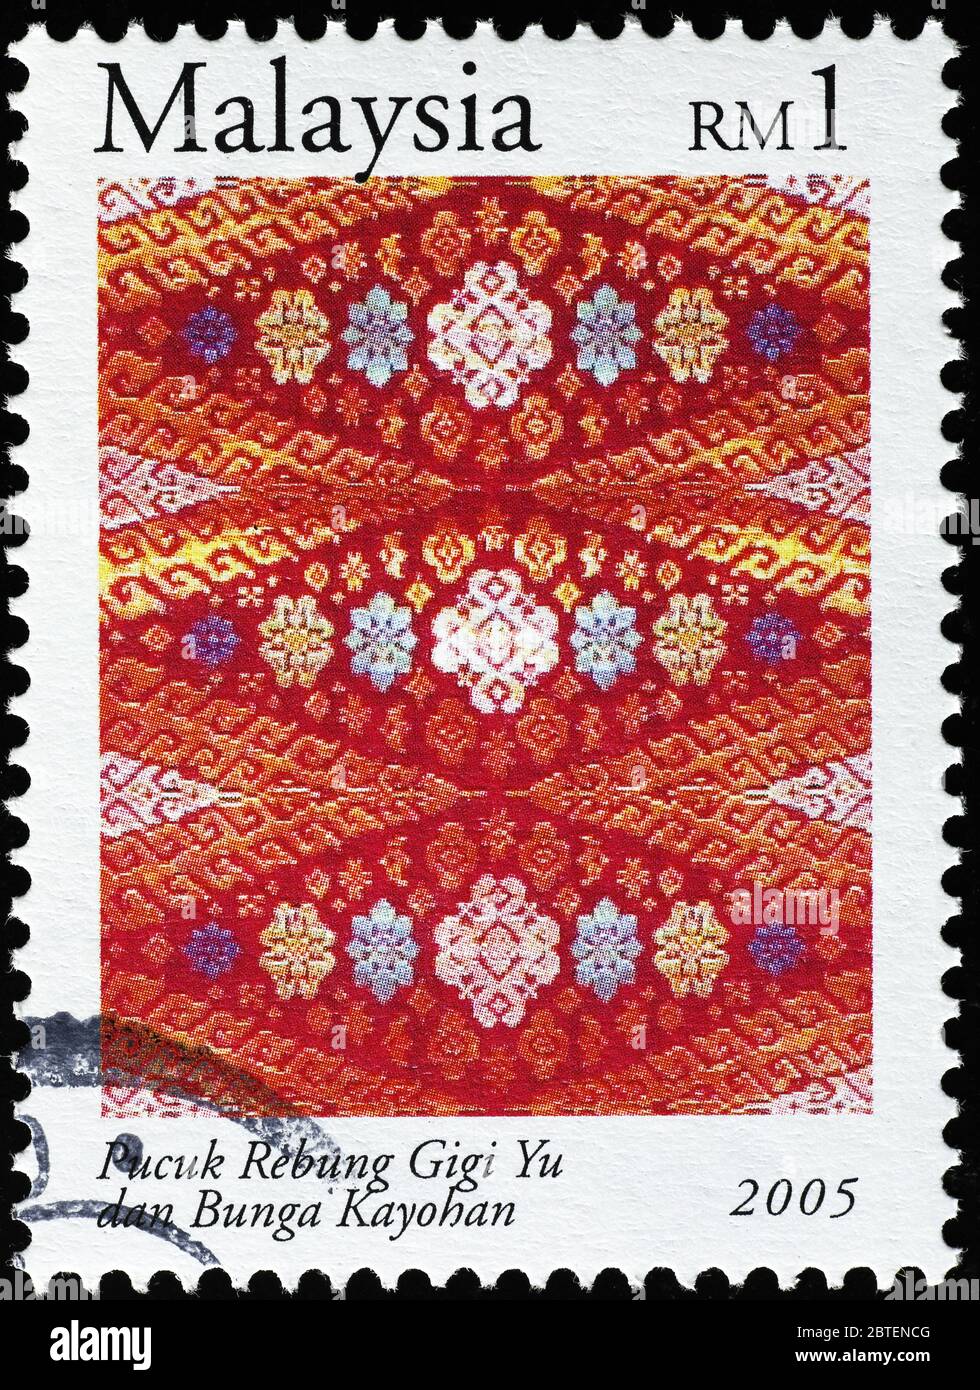 Beautiful malaysian fabric on postage stamp Stock Photo